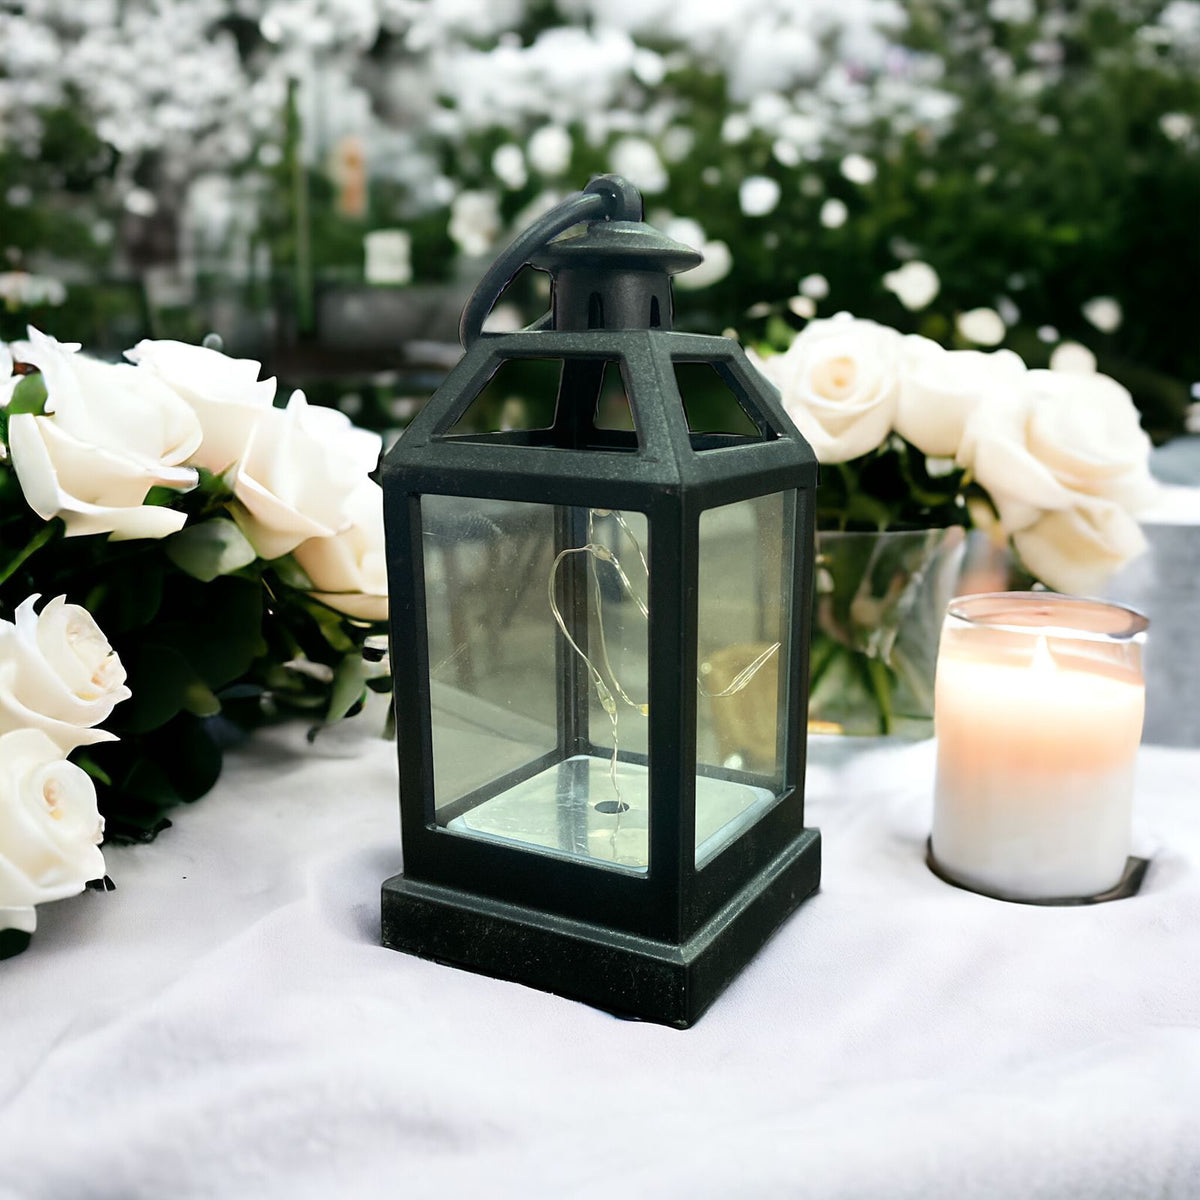 Simple Lantern Shaped Led Candle Lights | Home Decor - Home Hatch